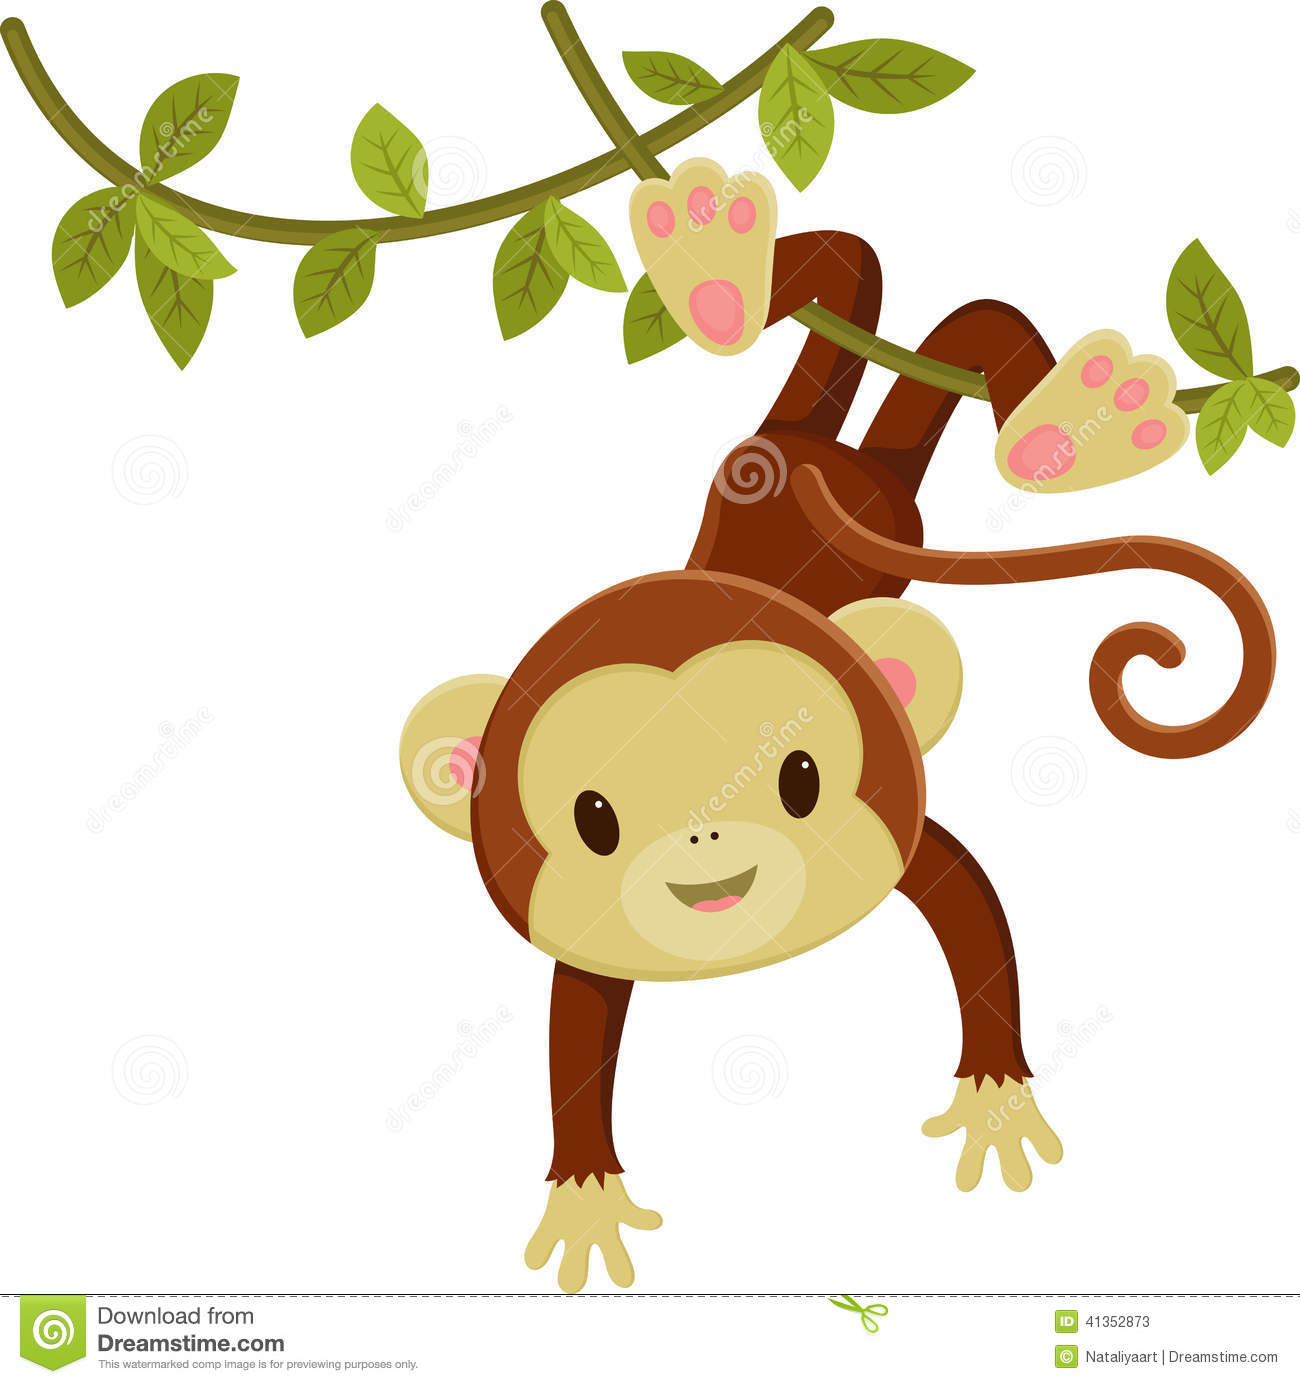 Baby monkeys clip art .